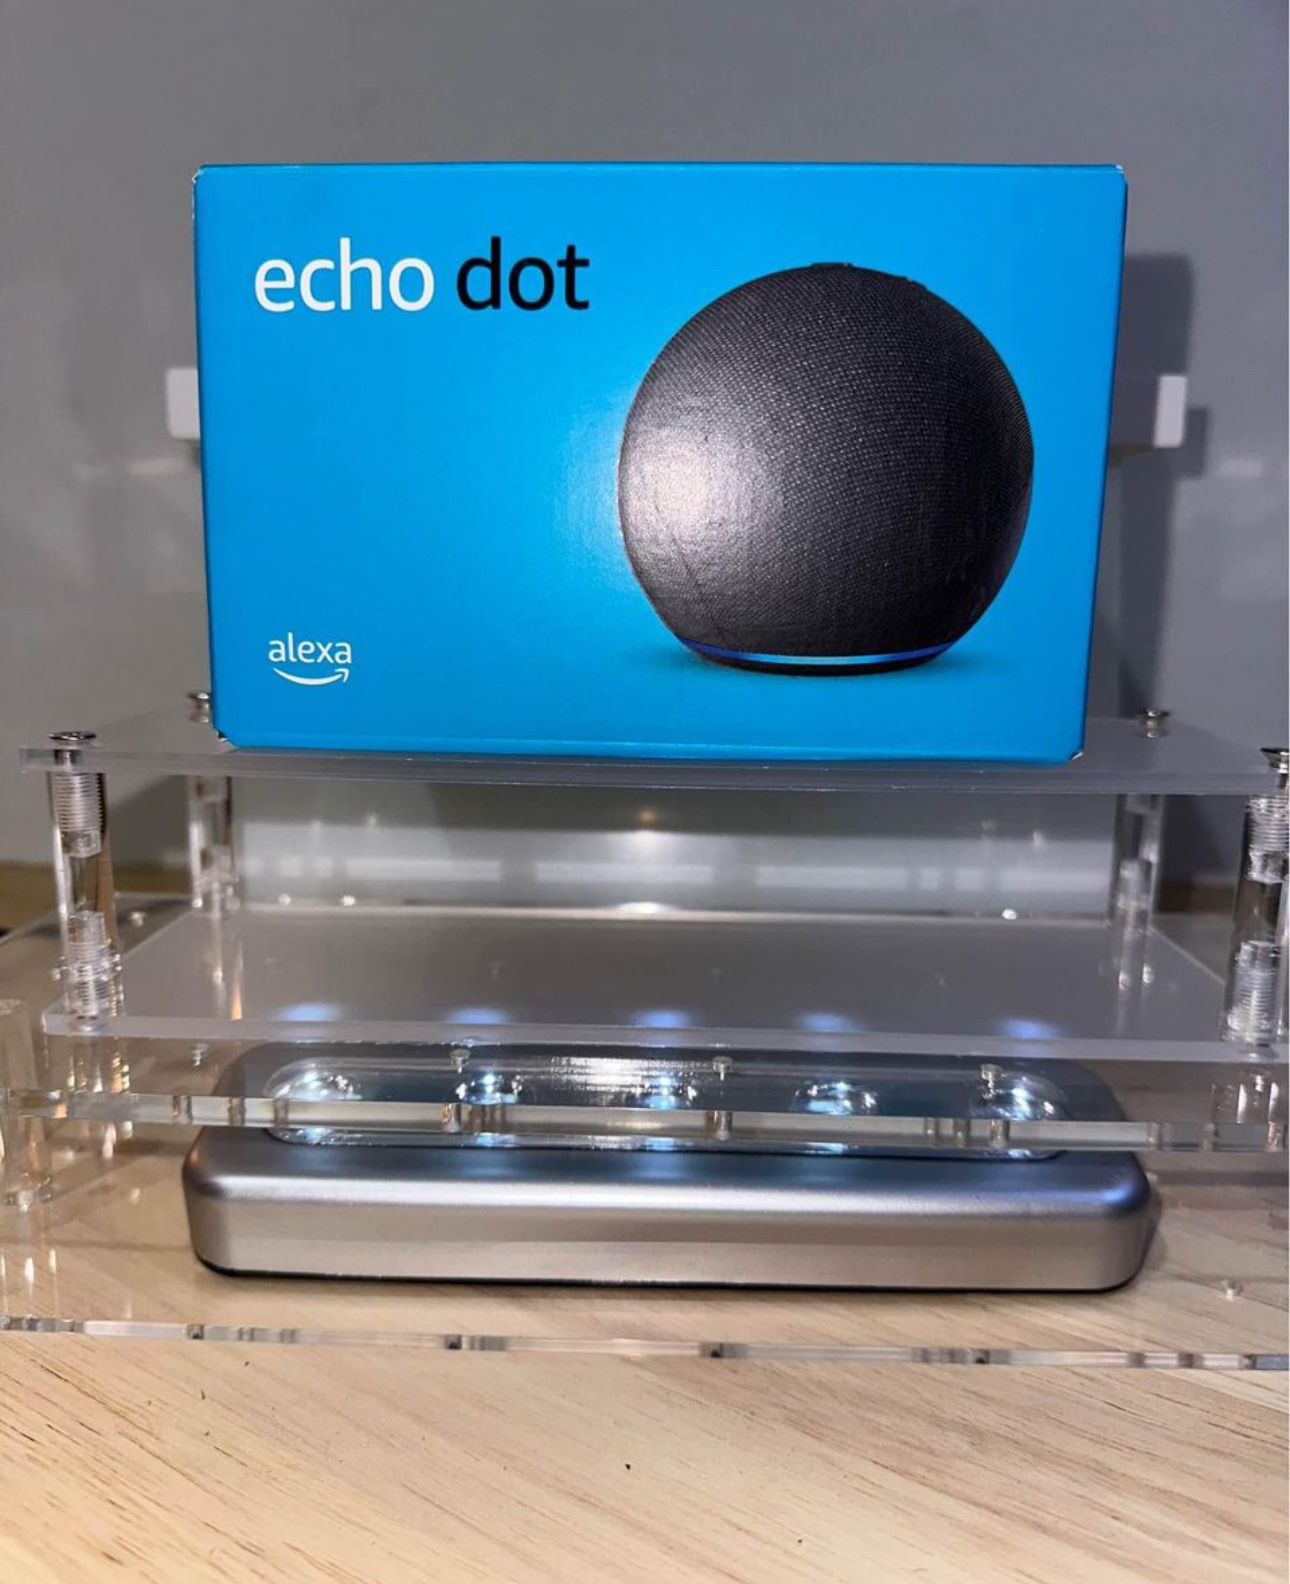 Amazon Echo Dot Bluetooth Speaker With Alexa AI